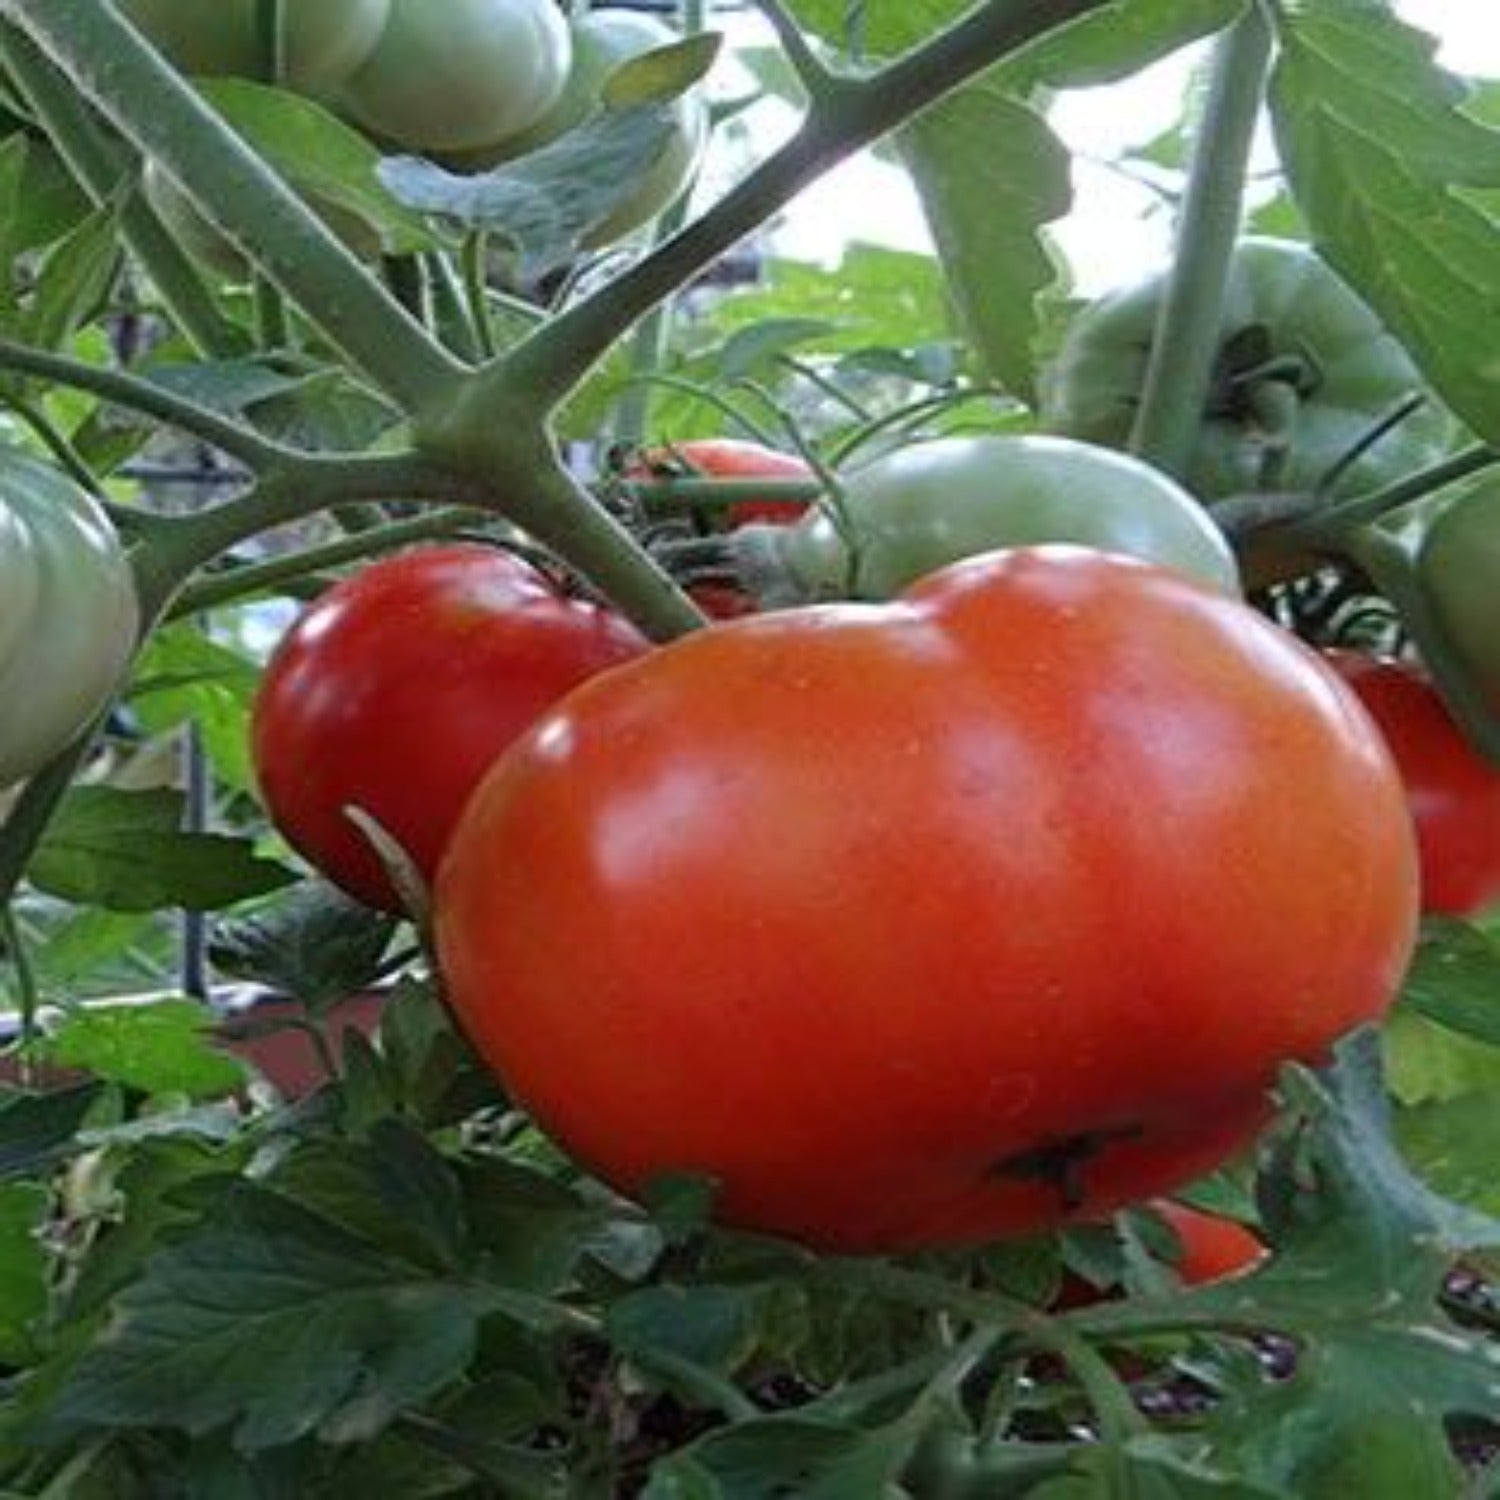 Heat Master Hybrid Tomato Seeds